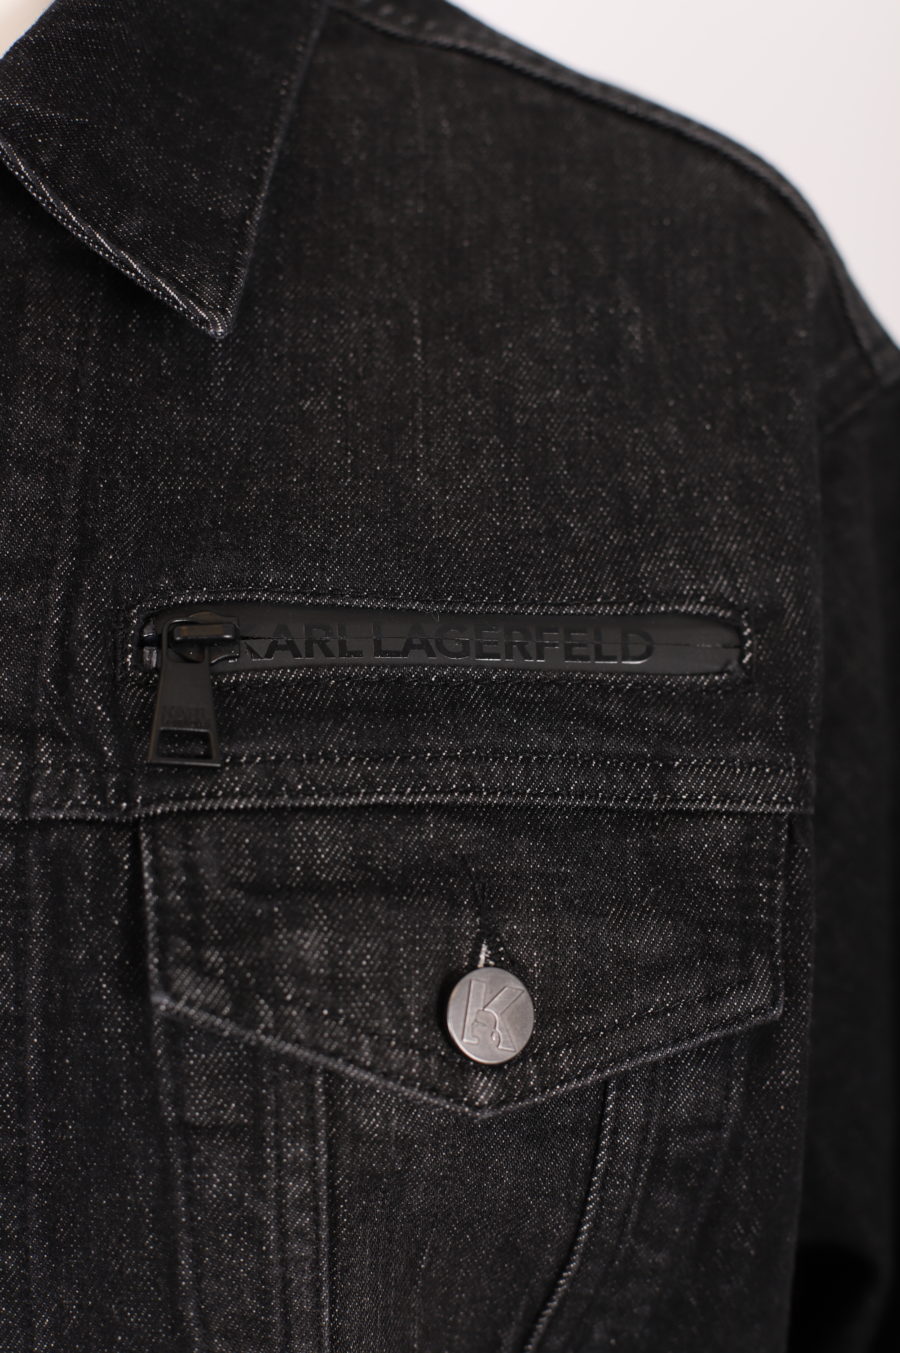 Schwarze Jeansjacke mit Logo auf dem Rücken - d3bc3778a2f01c0432b00d3e9c086e5640e80f62